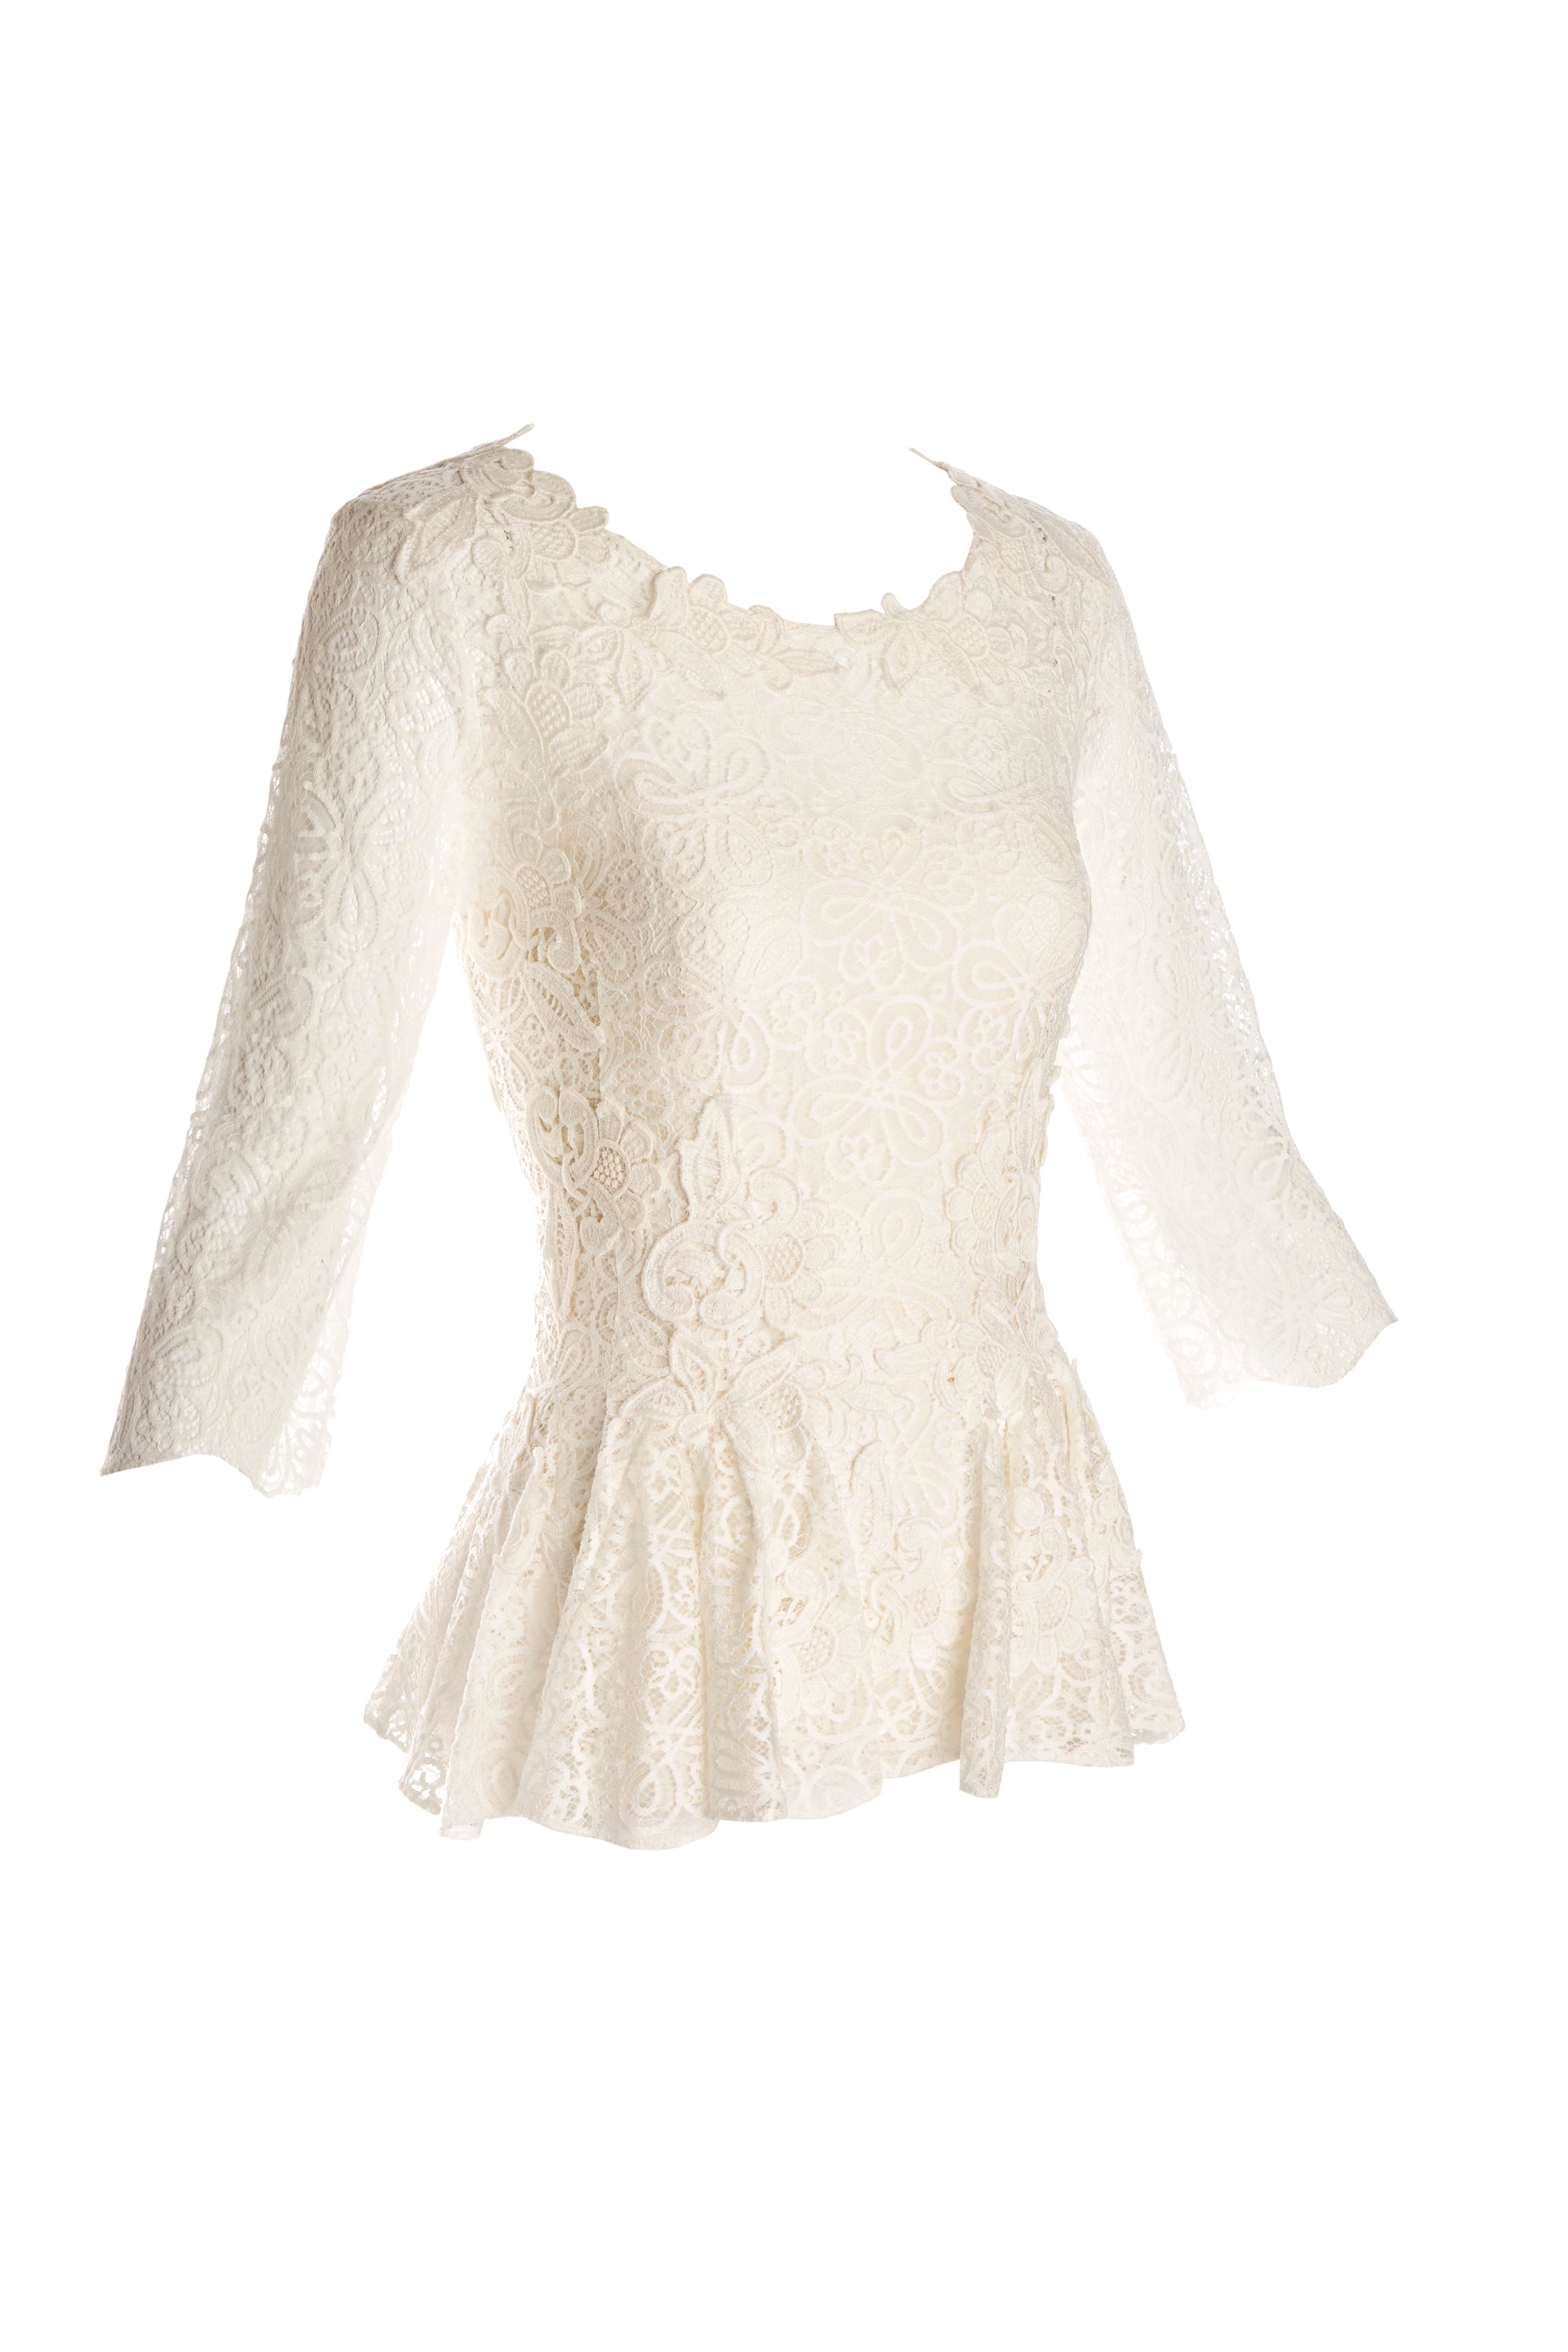 Oscar de la Renta White Lace 3/4 Sleeve Peplum Skirt - Foxy Couture Carmel